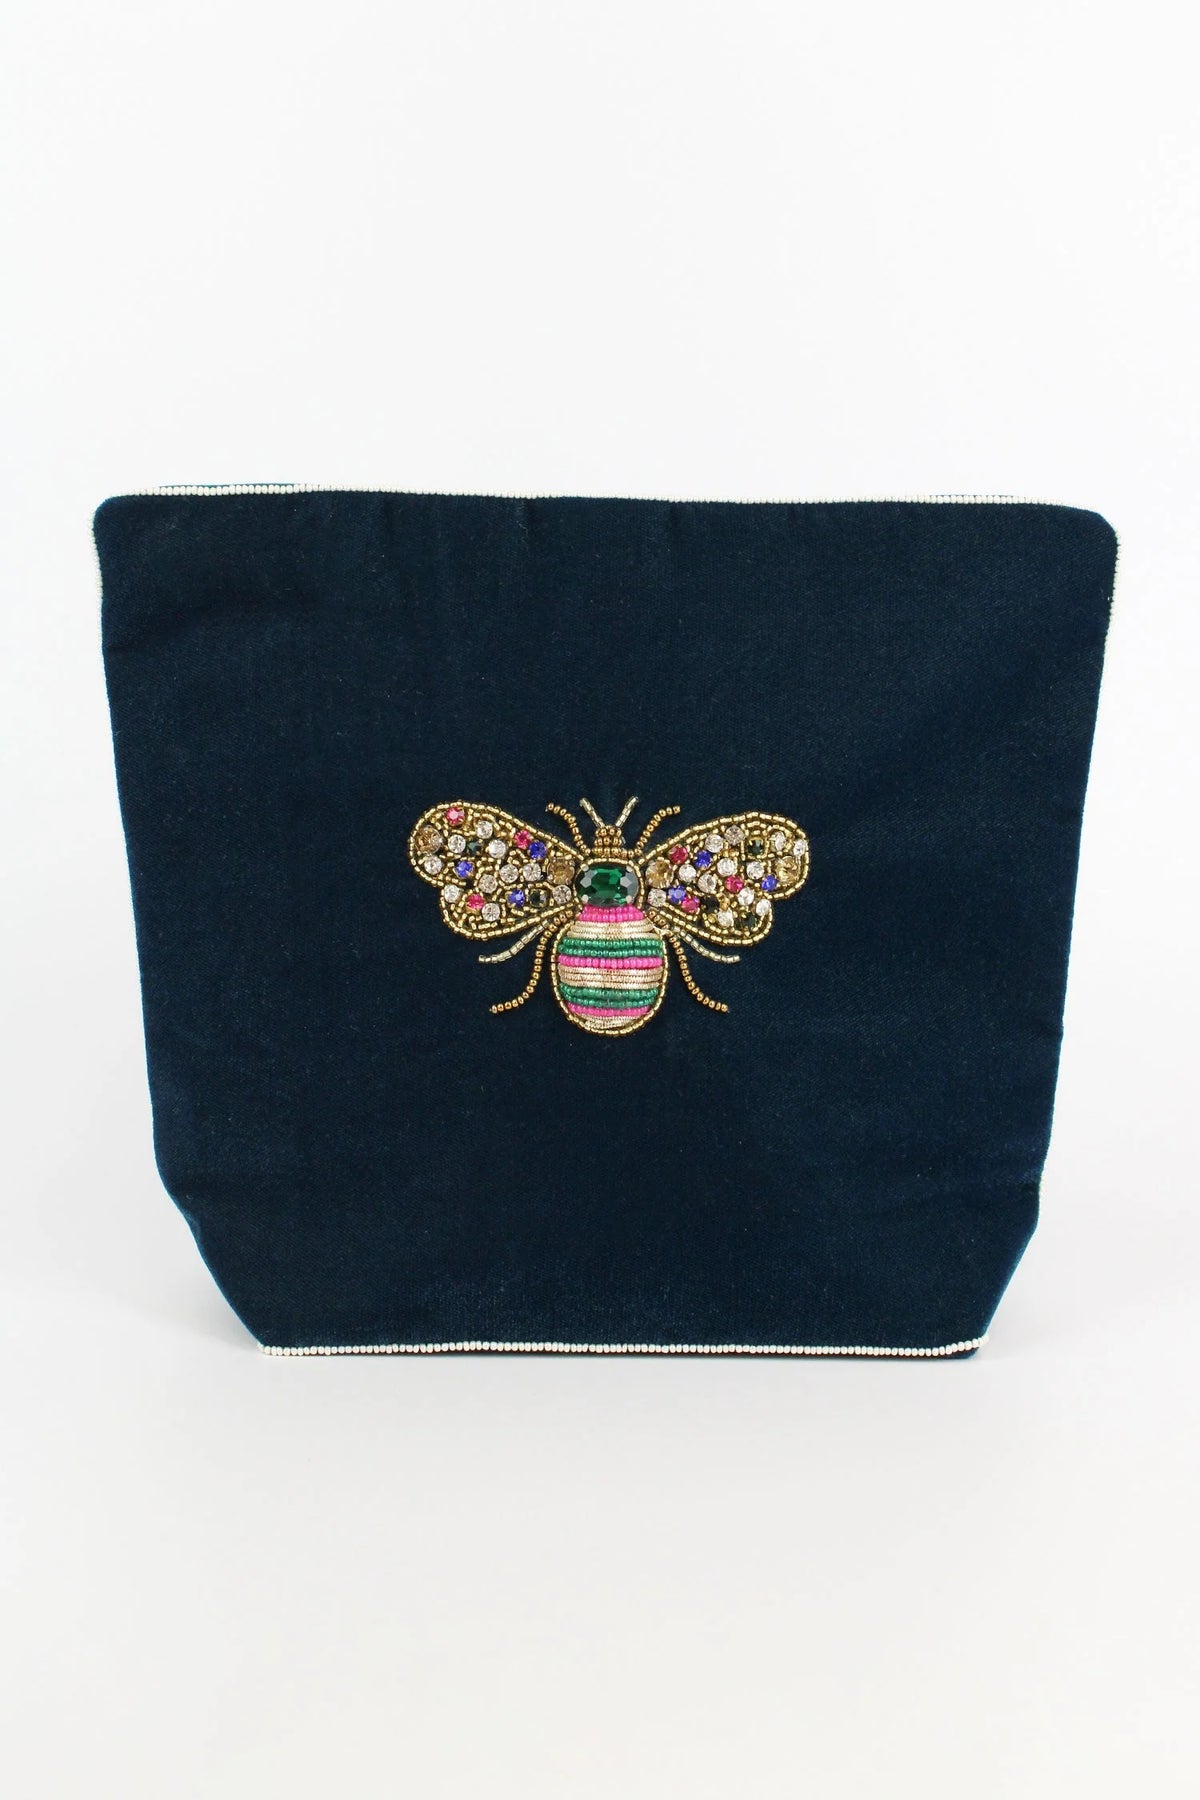 Jewelled Bee Makeup Bag